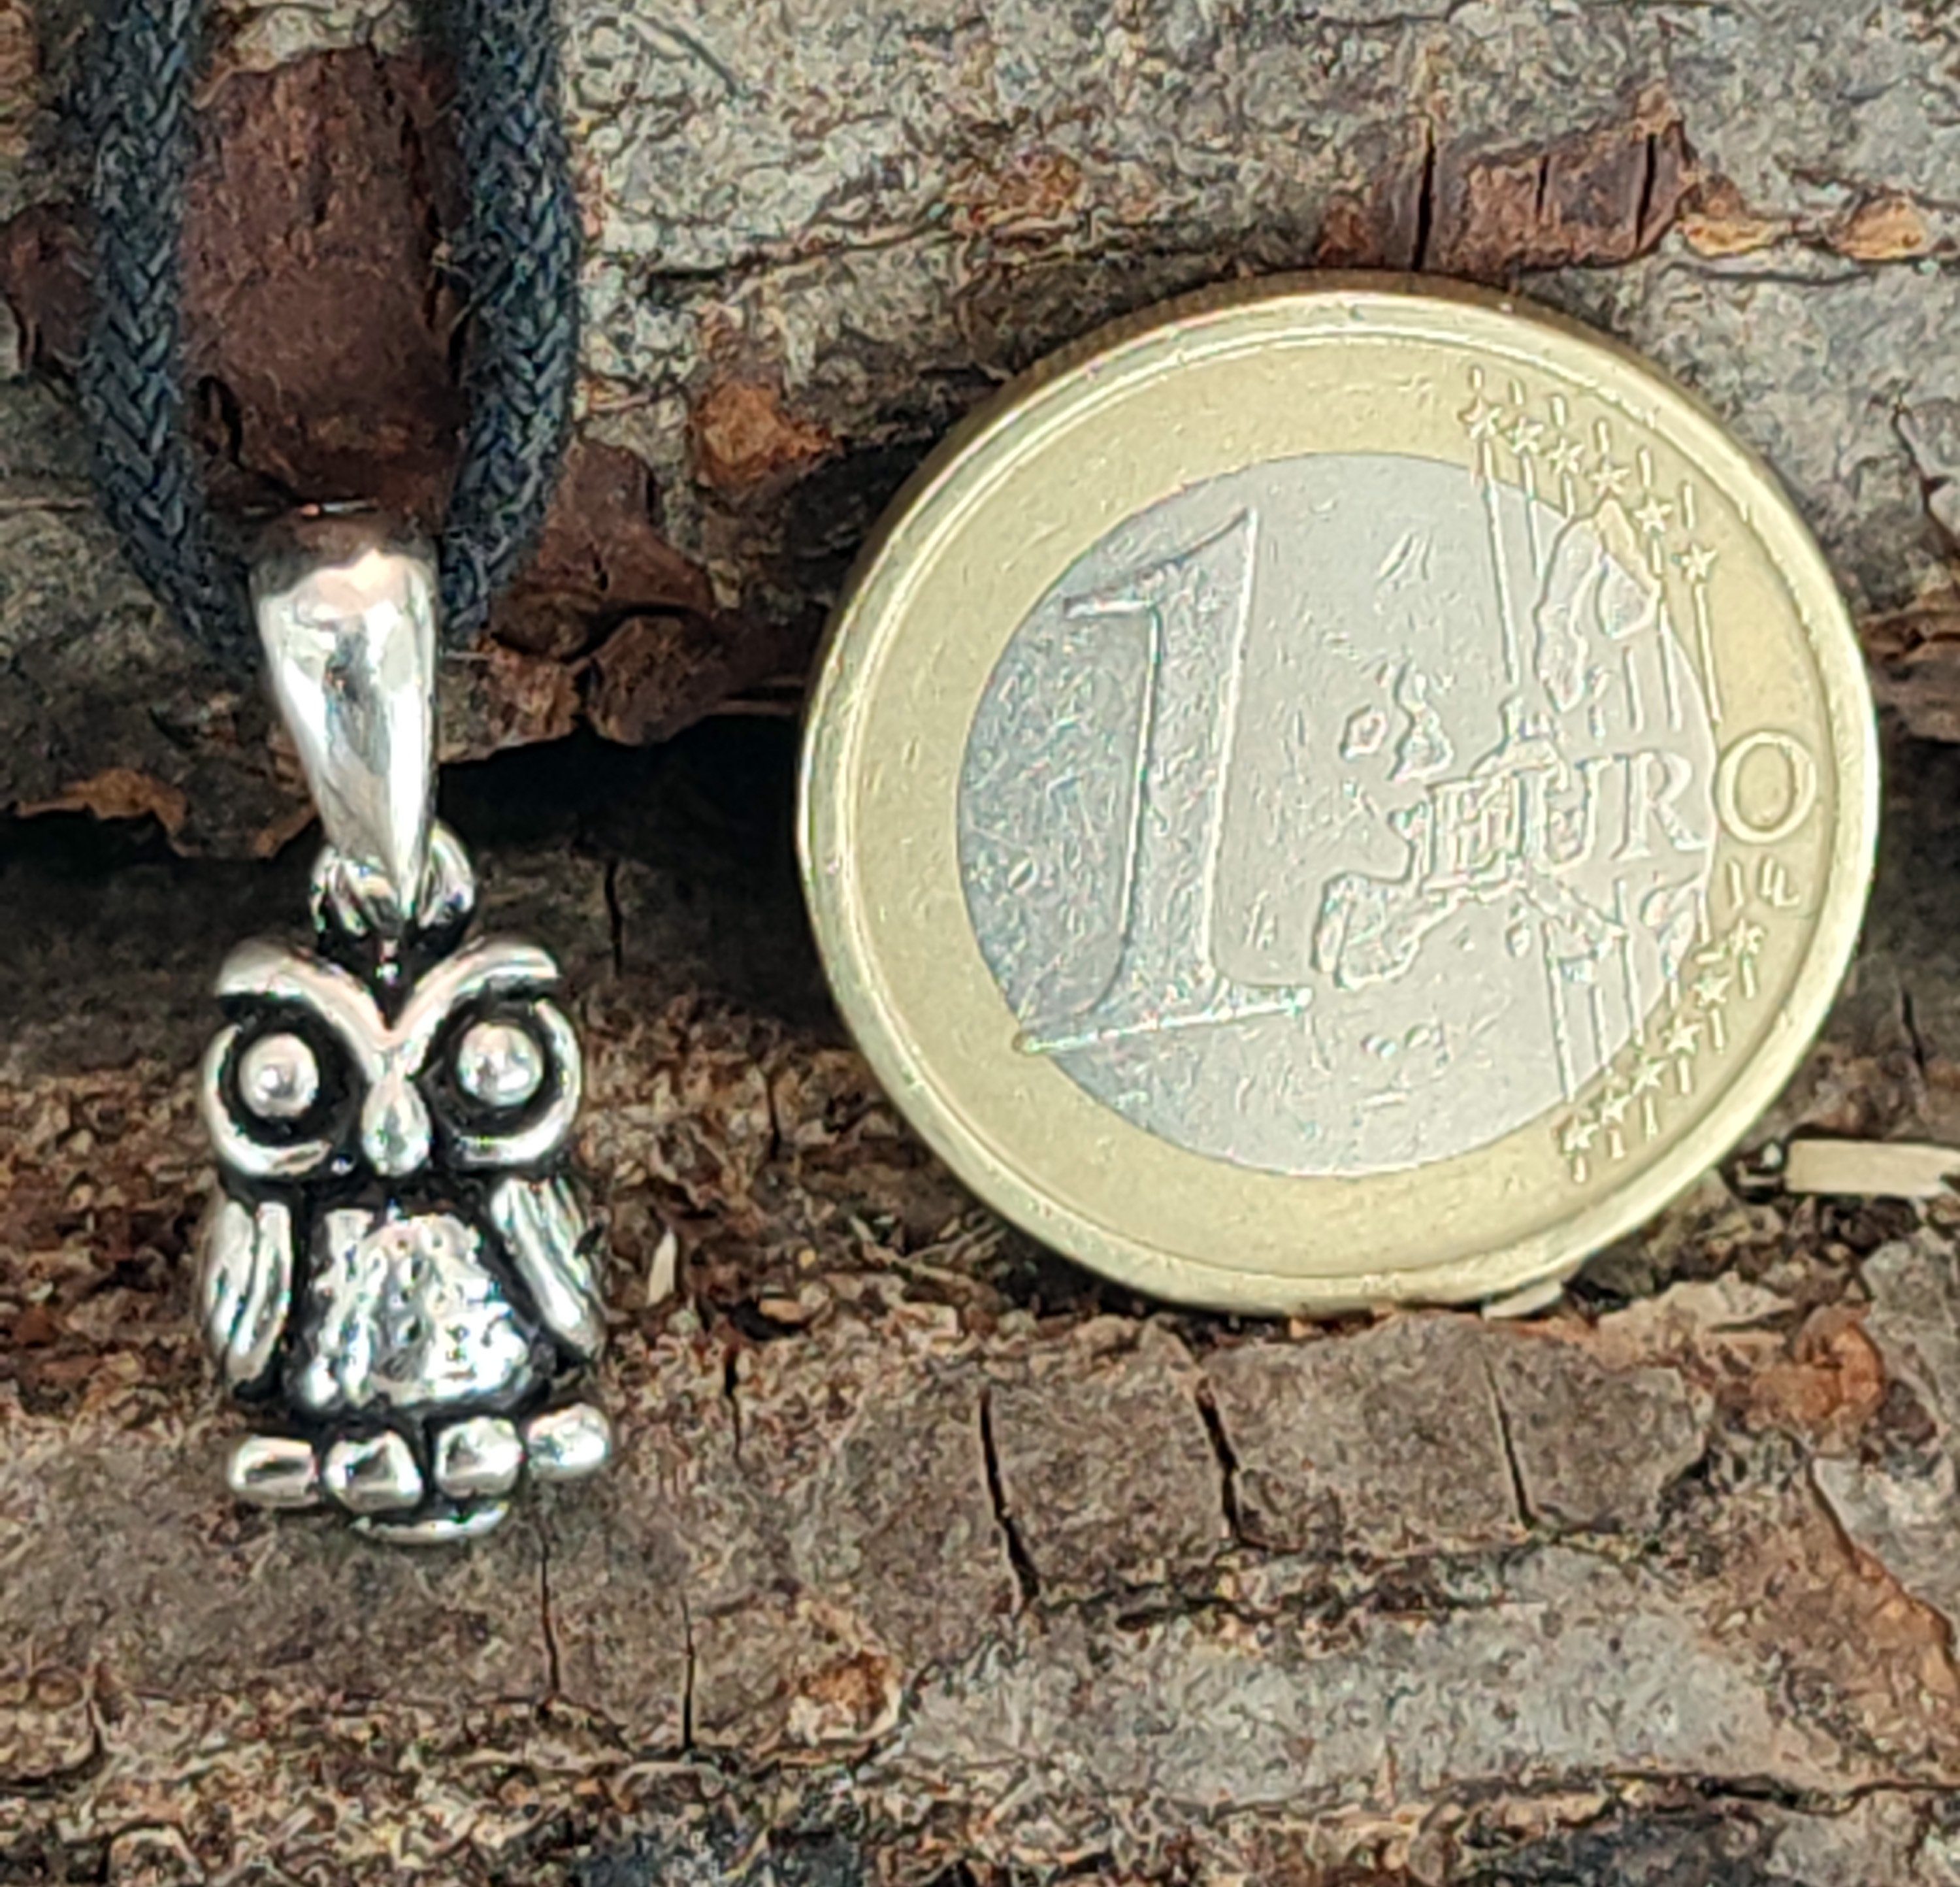 of Eule Owl Leather Silber Kettenanhänger Anhänger Flügel 925 Kiss Uhu Eulen Sterling